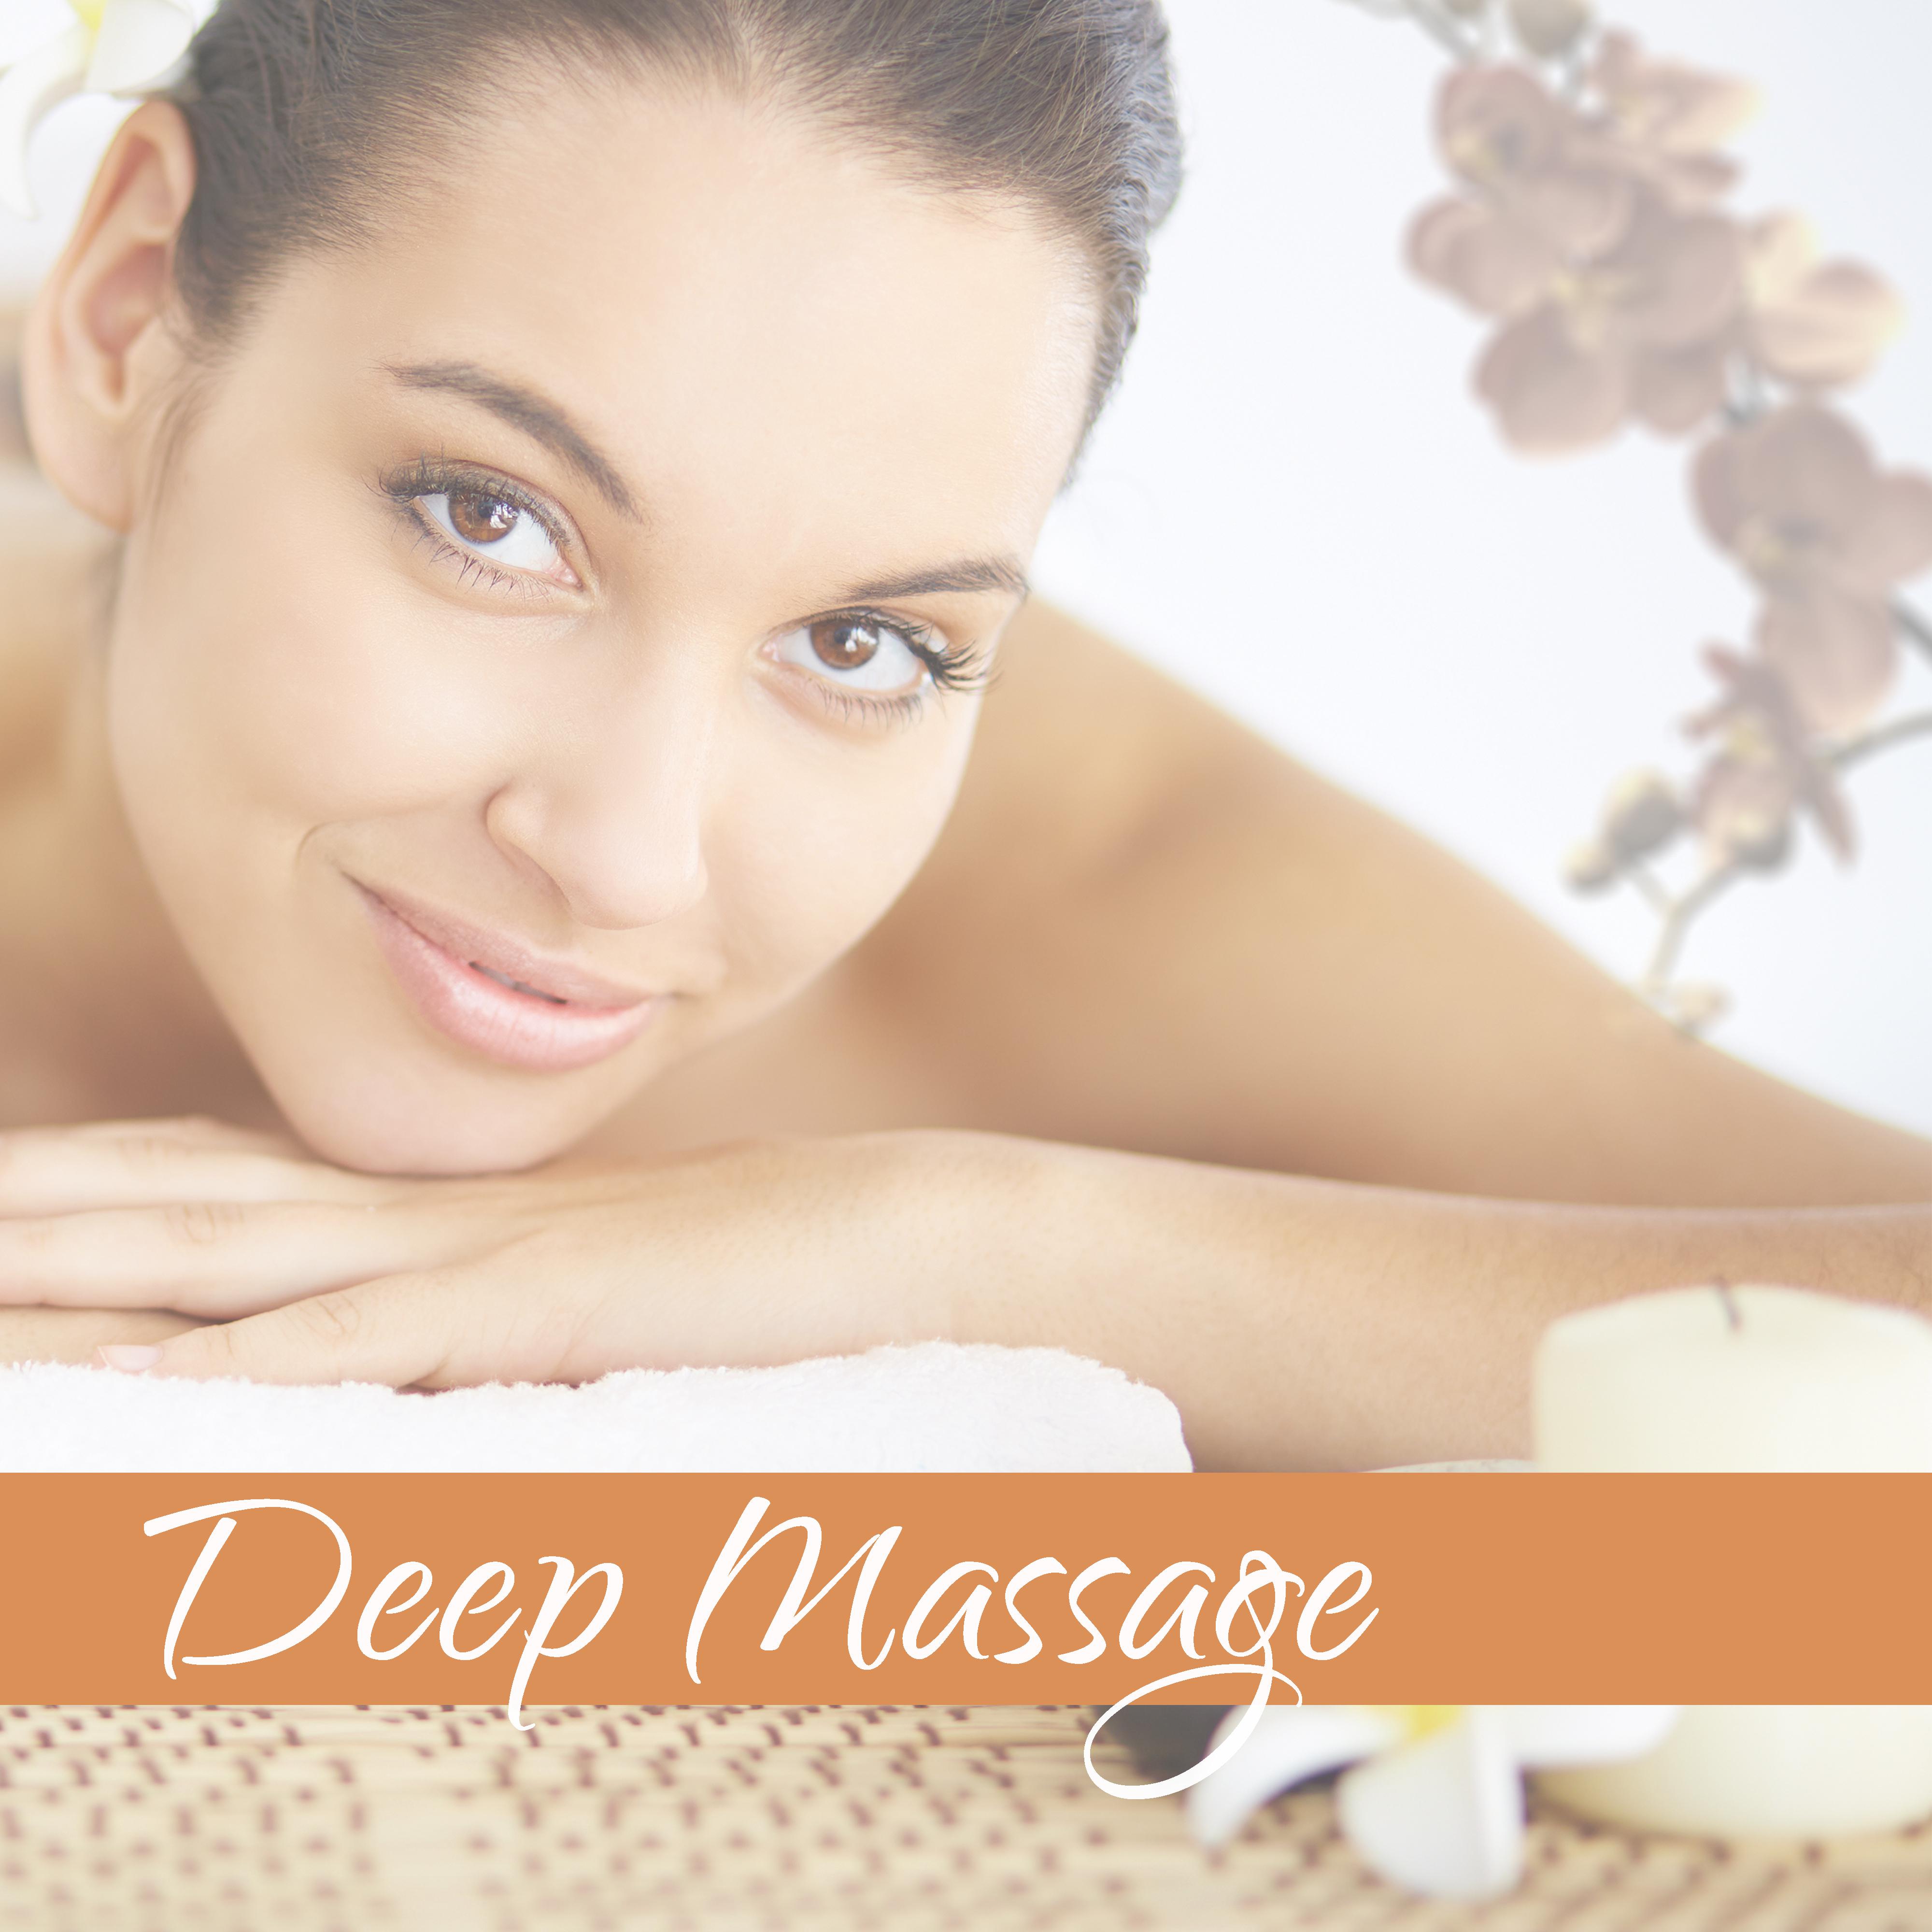 Deep Massage – Wellness Music, Calm Sleep, Bliss Spa, Relaxation, Massage Therapy, Rest